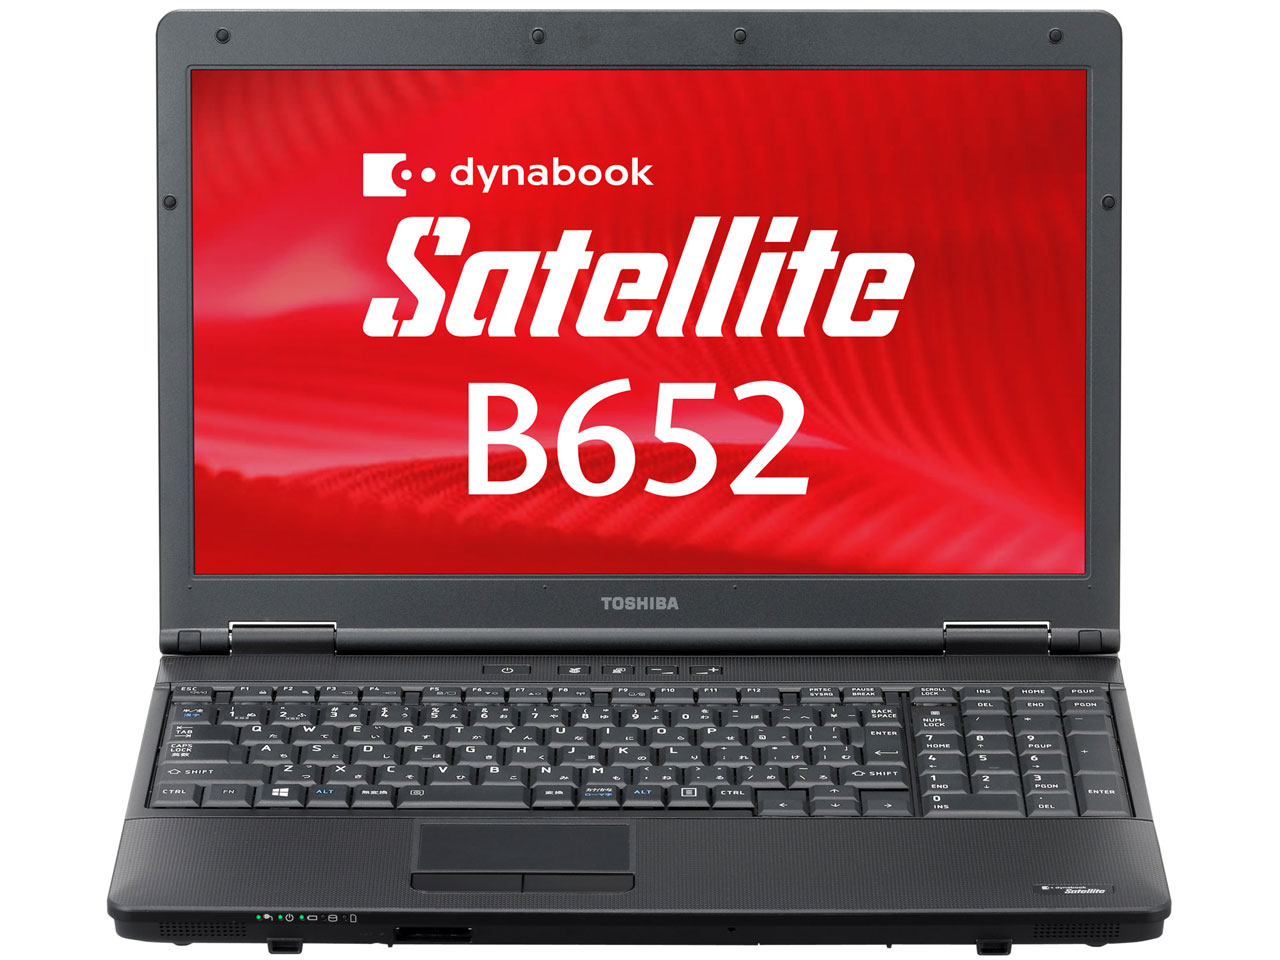 dynabook Satellite B652 B652/H PB652HBBPKEA71